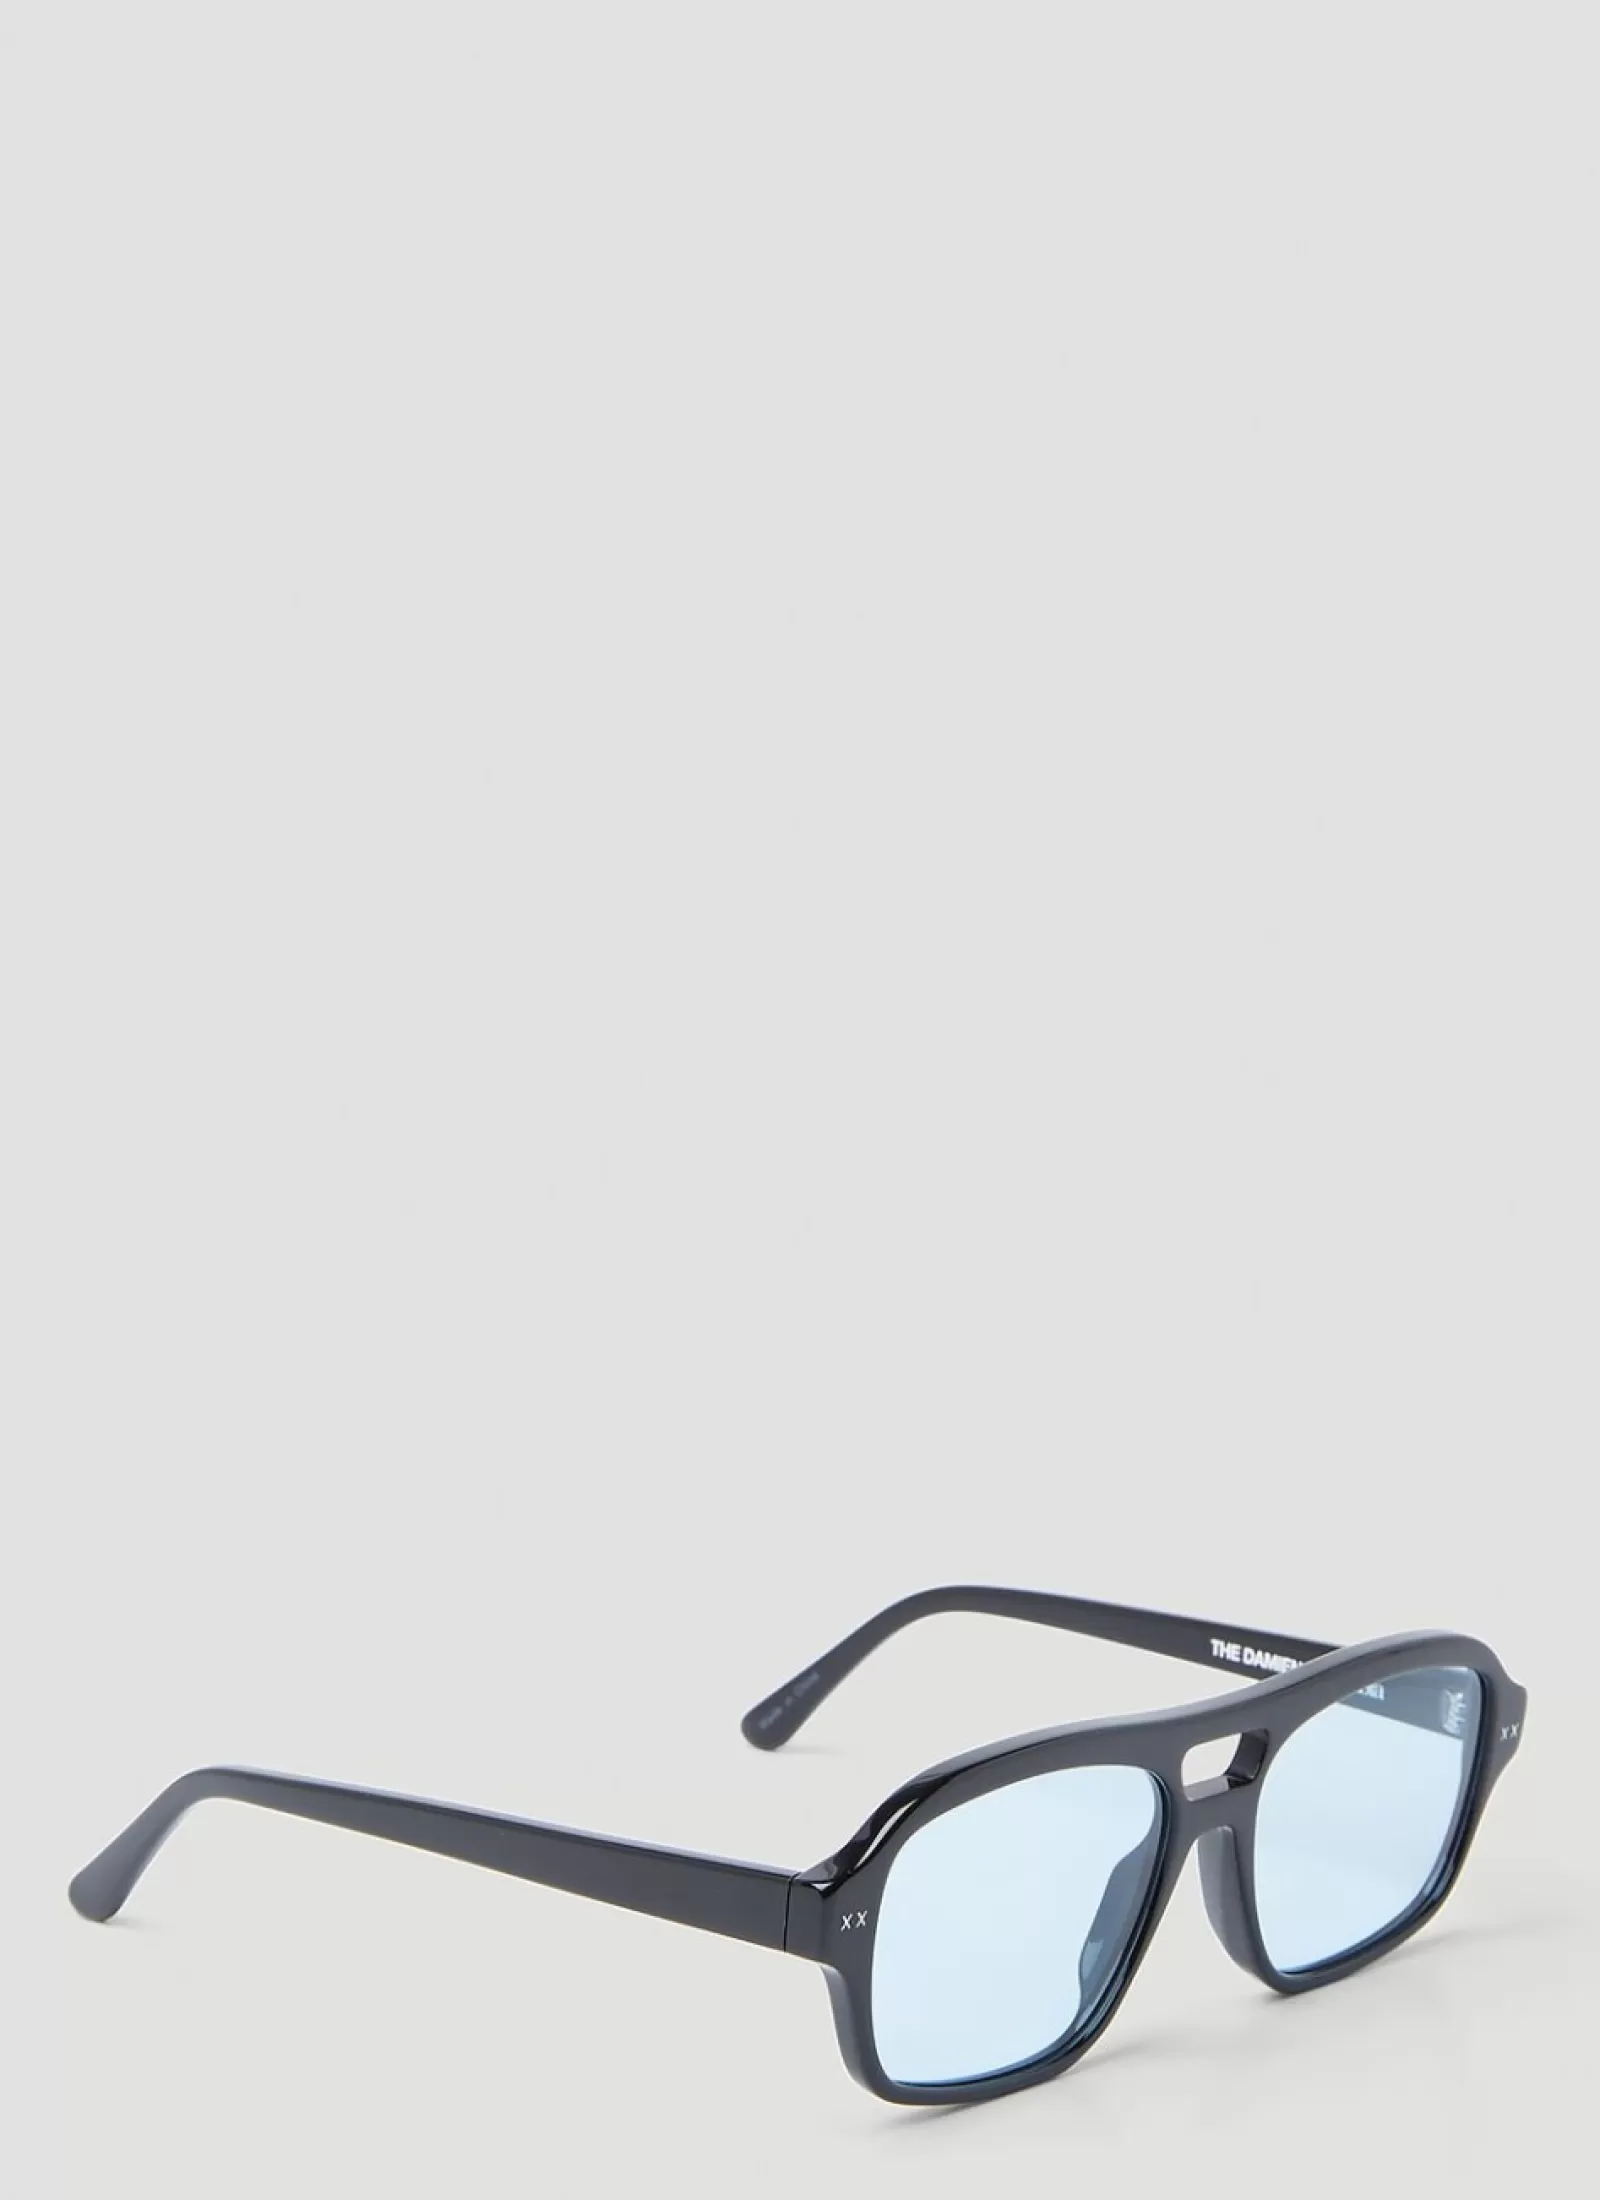 Online Lexxola Damien Aviator Sunglasses Black